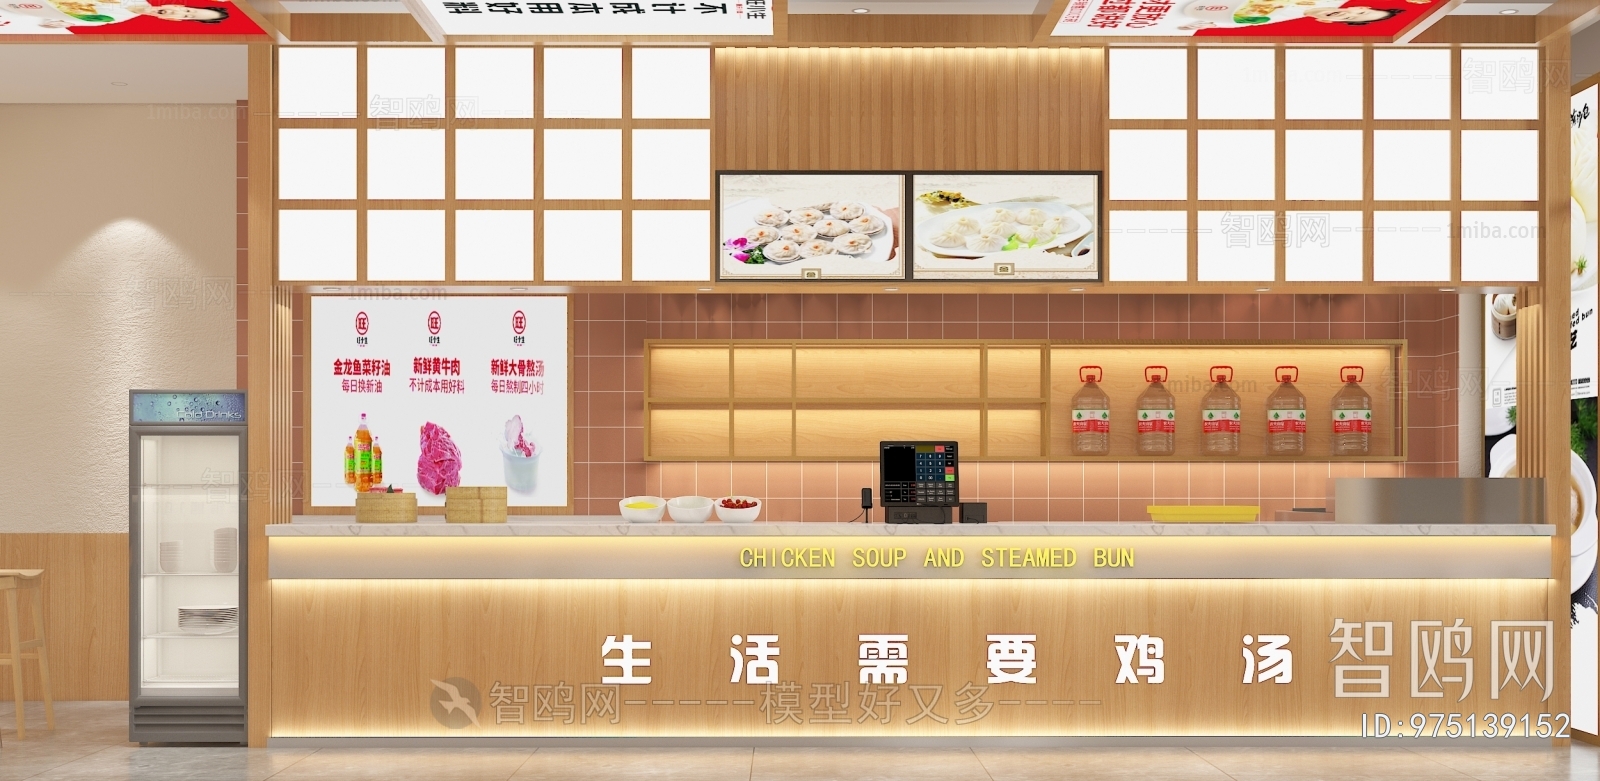 New Chinese Style Restaurant